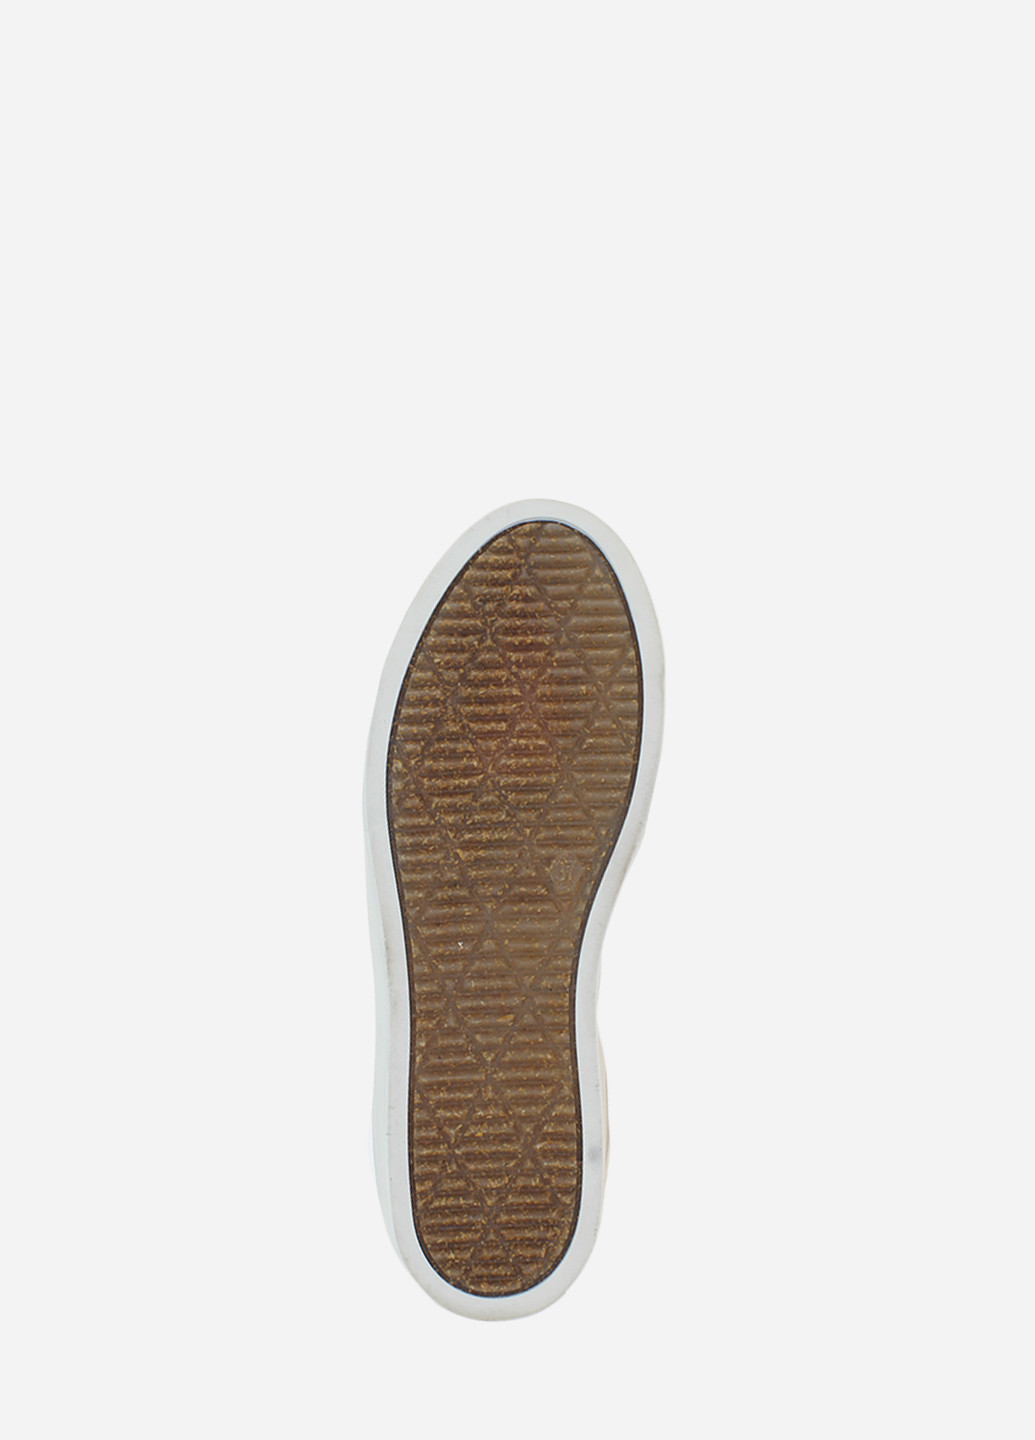 Осенние ботинки rv4615 коричневый Vito Villini из натурального нубука, из натуральной замши